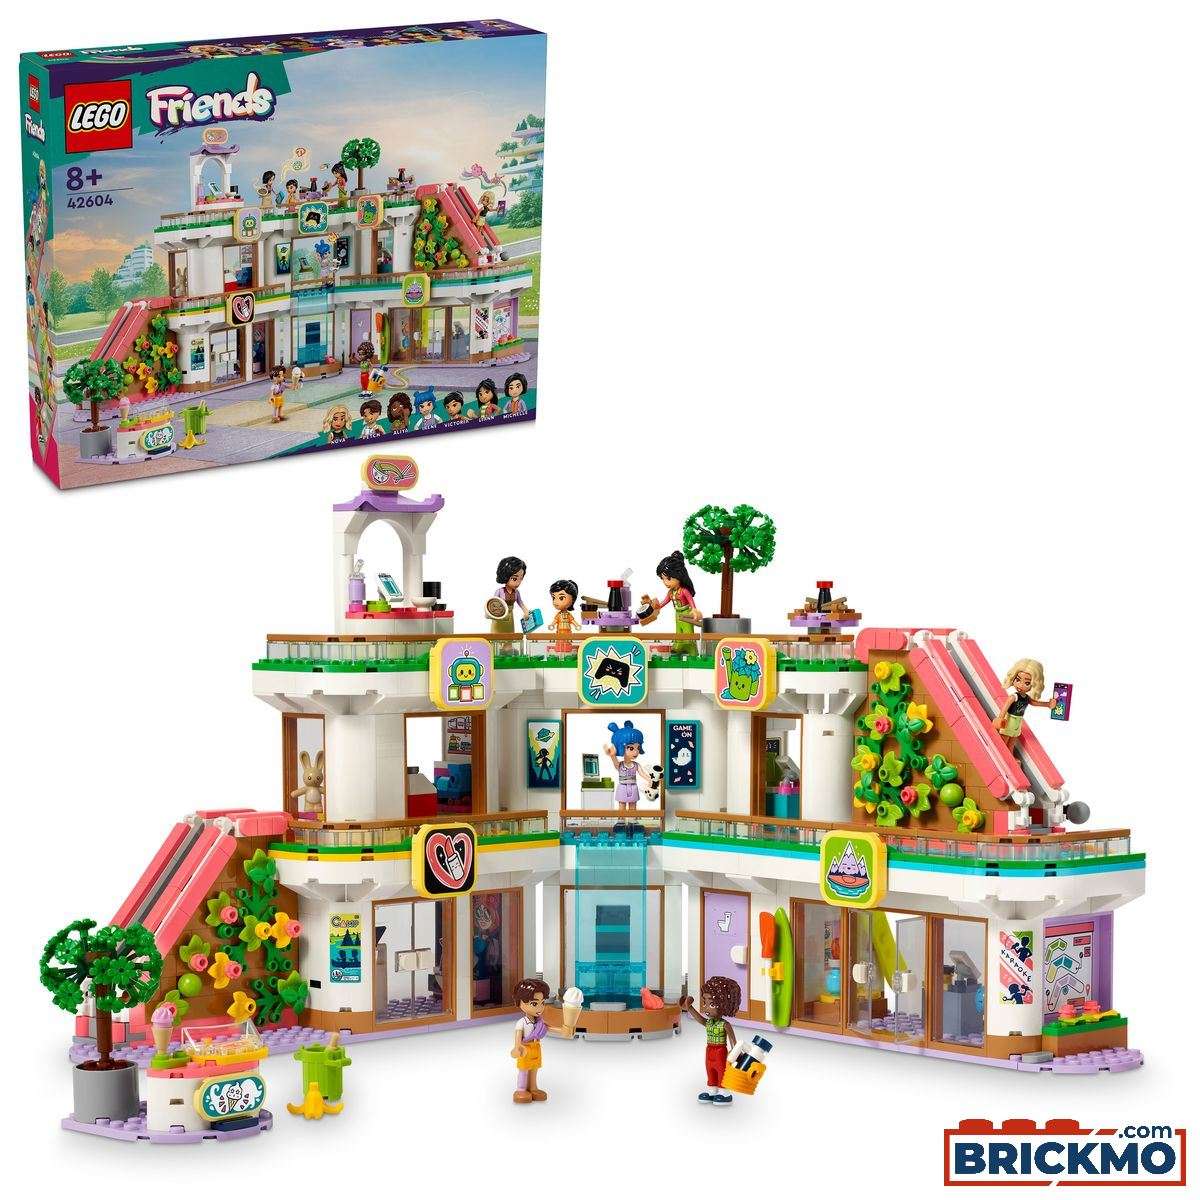 LEGO Friends 42604 Heartlake City Shopping Mall 42604